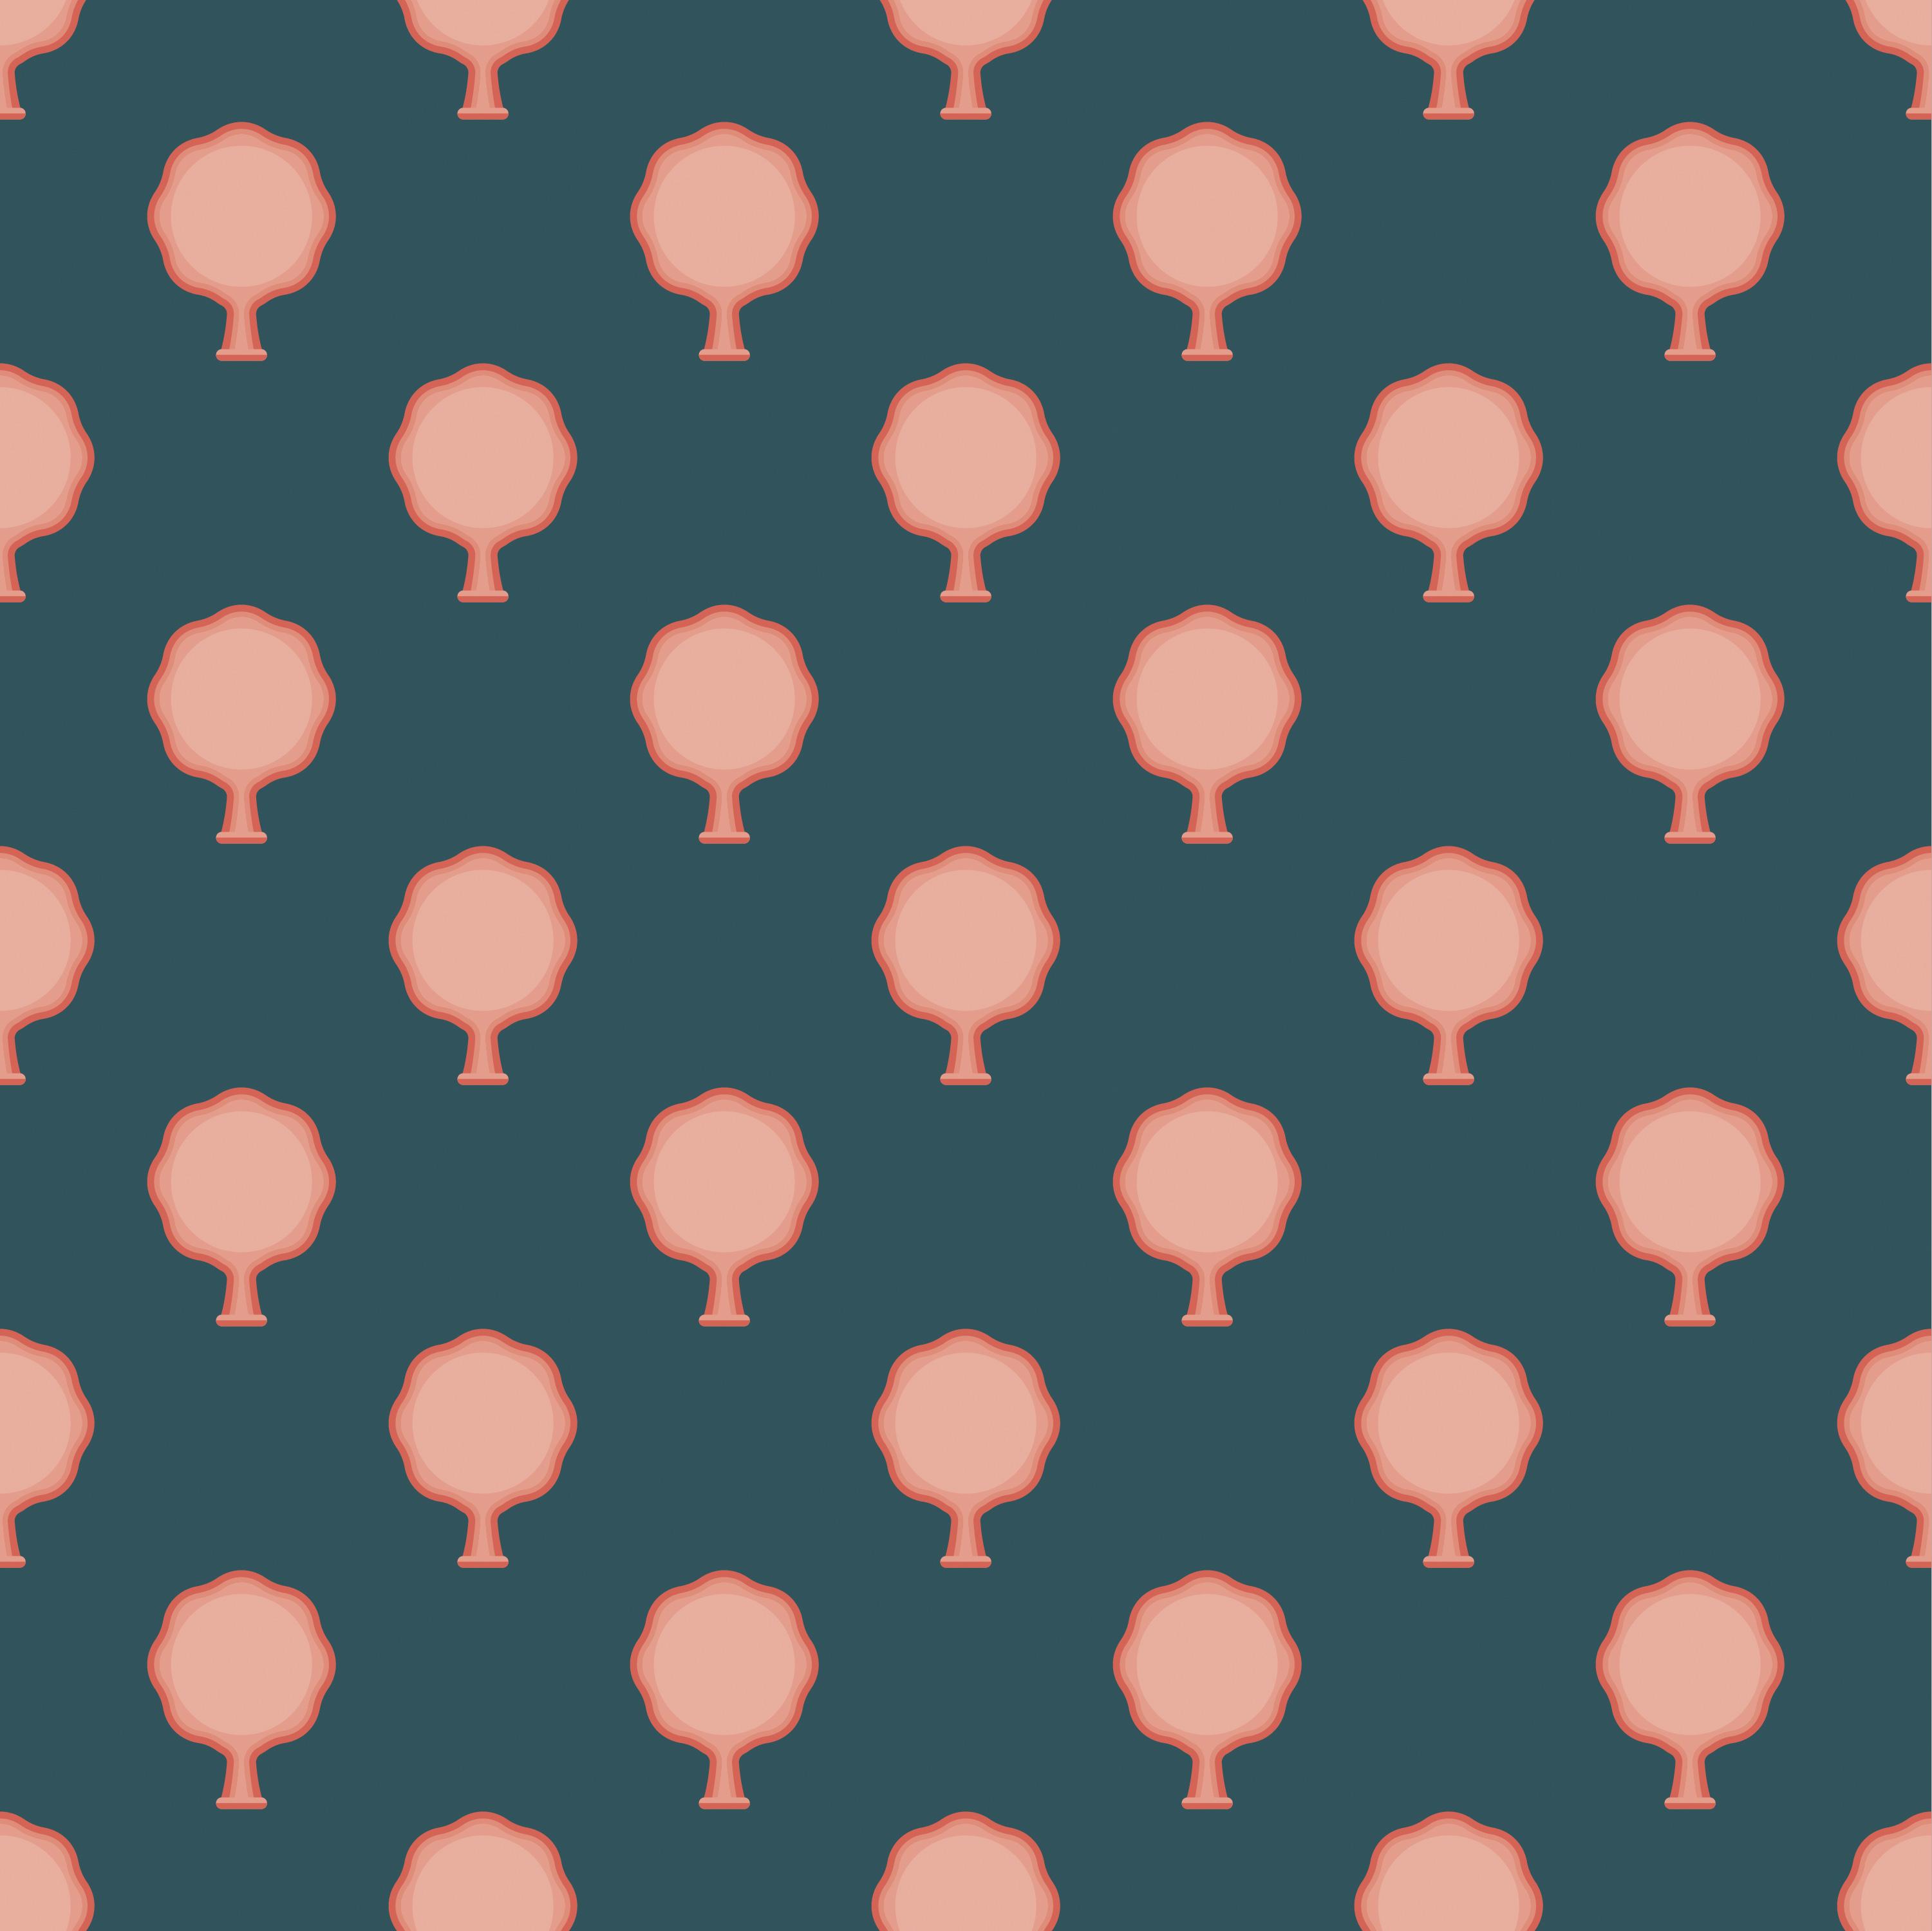 Whoppie cushion pattern